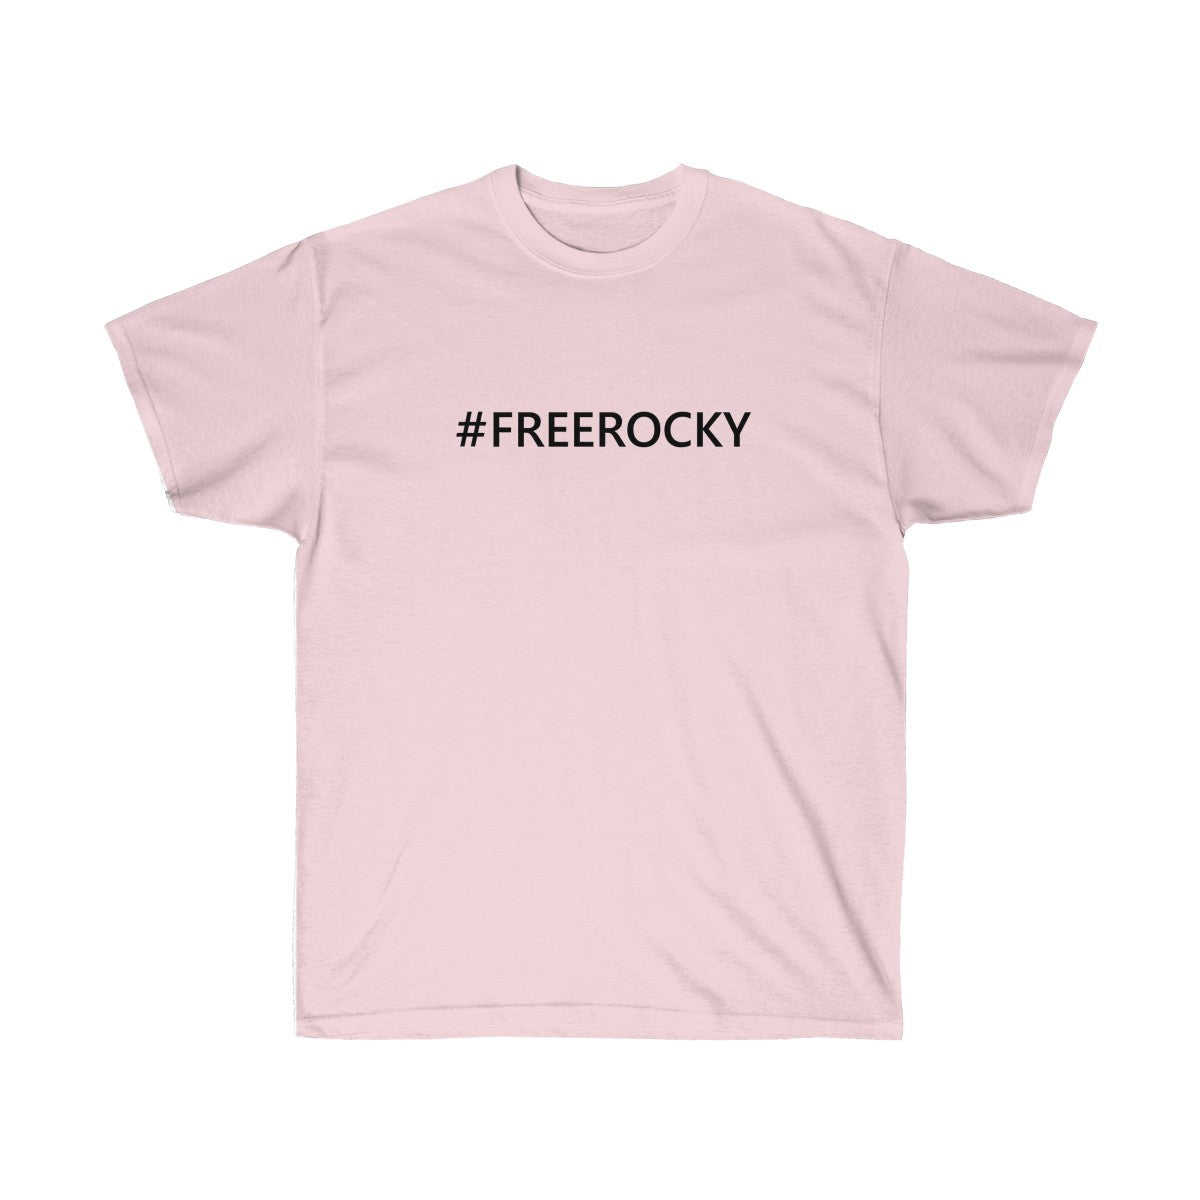 Unisex Ultra Cotton Tee #FREEROCKY T-Shirt-Light Pink-S-Archethype